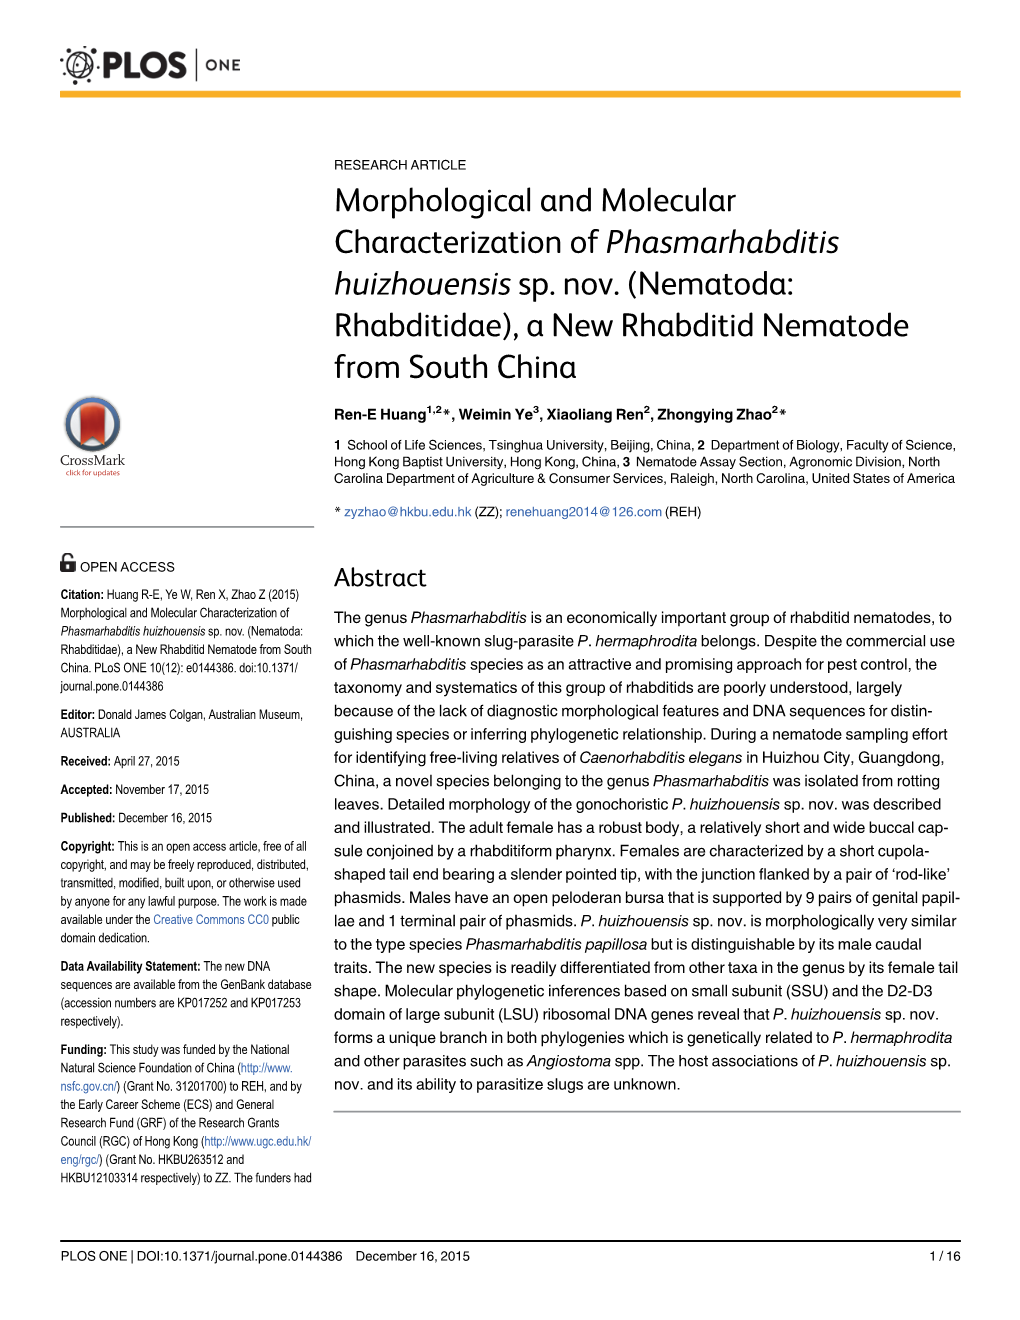 Morphological and Molecular Characterization of Phasmarhabditis Huizhouensis Sp